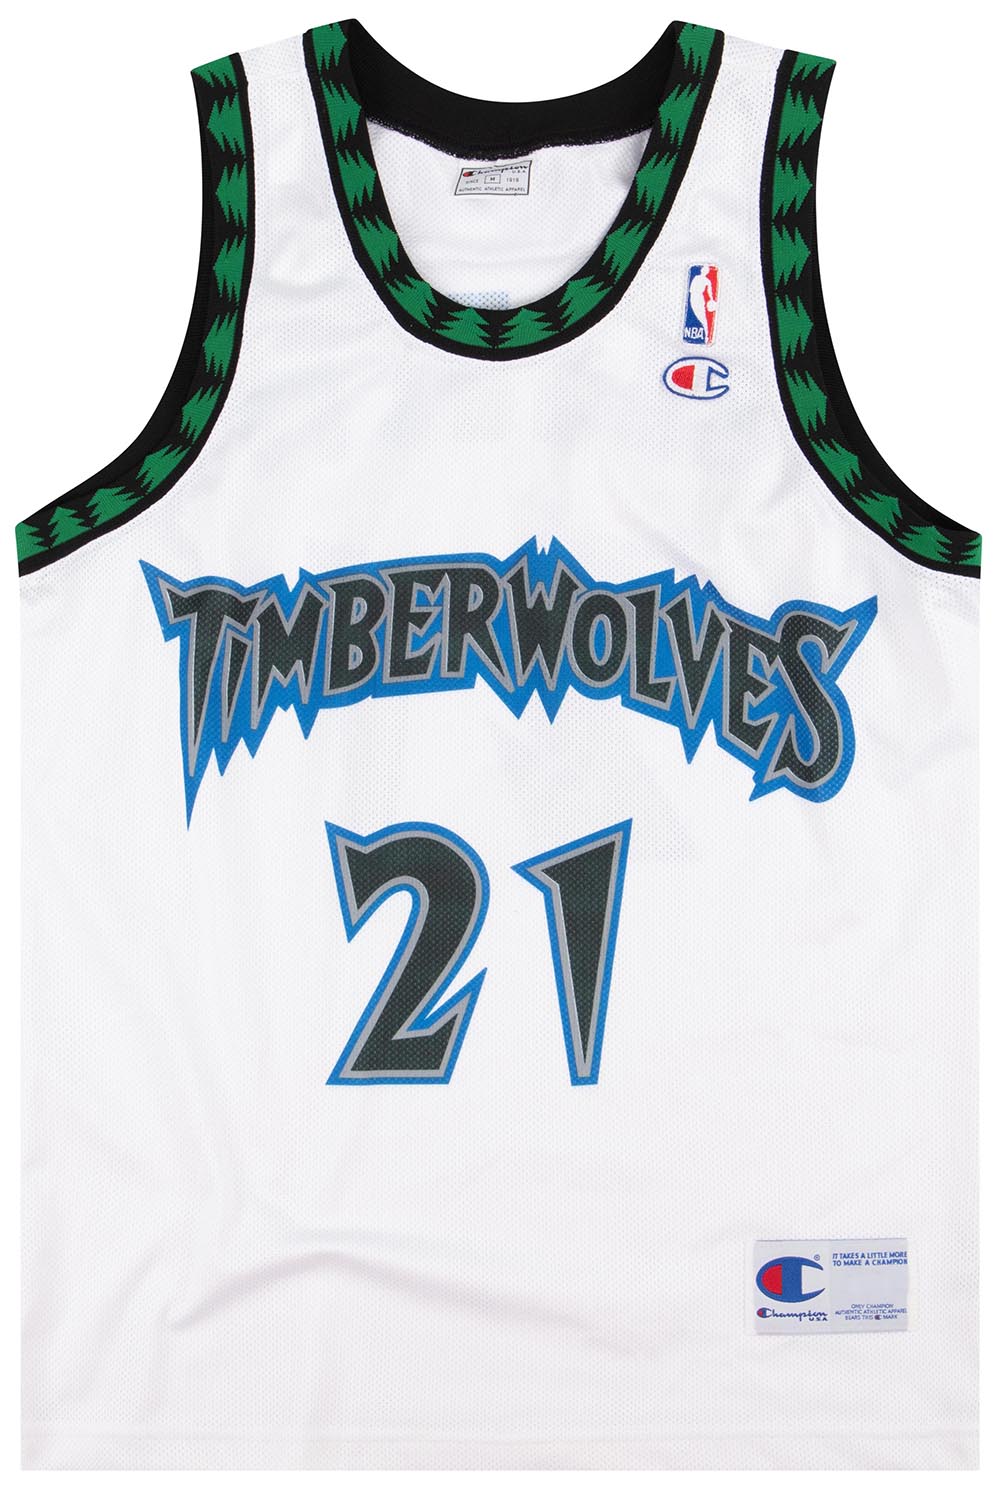 old timberwolves jersey